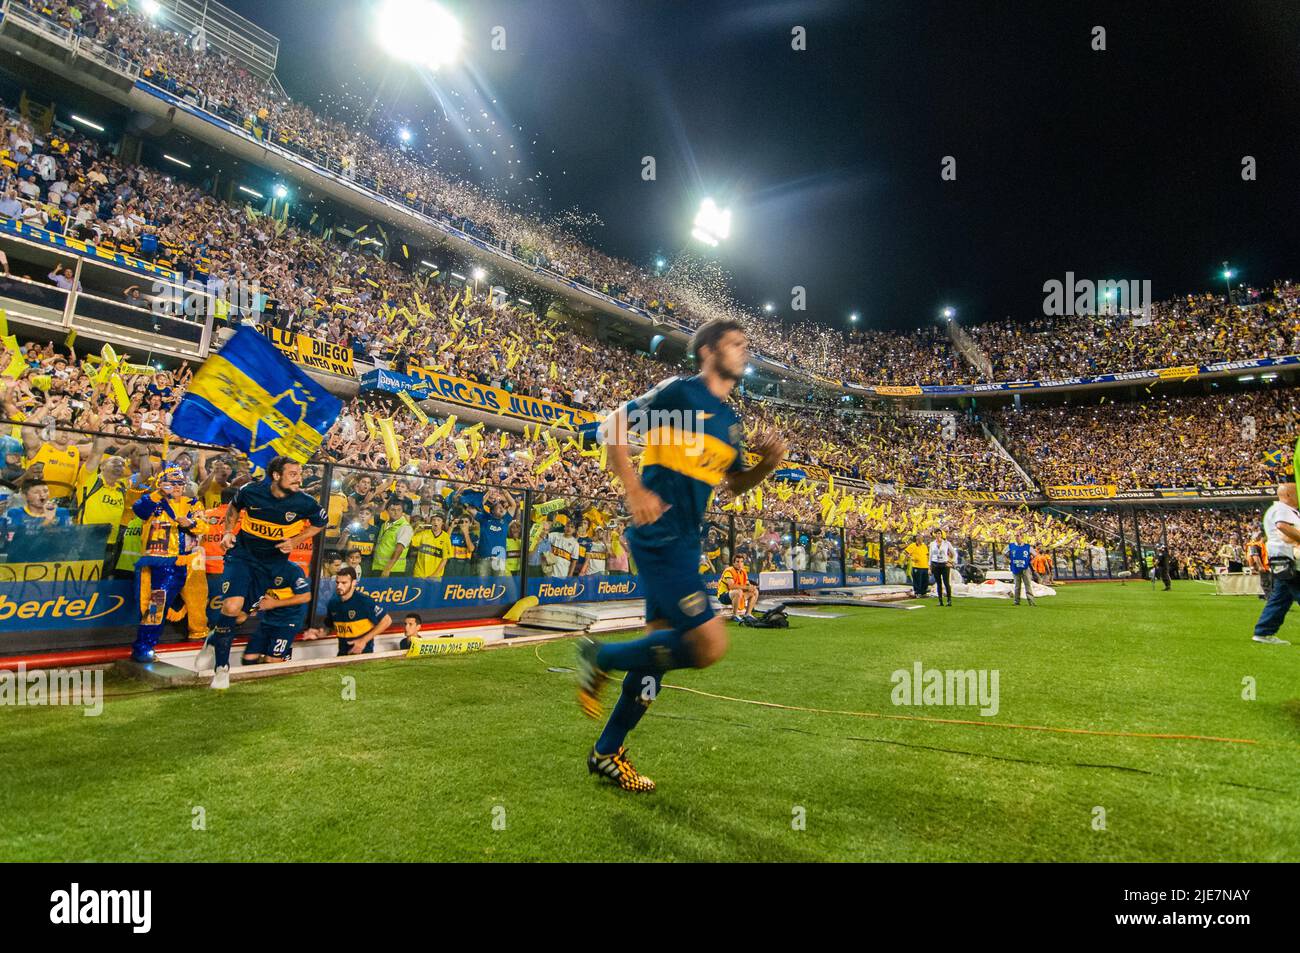 Boca Juniors supporters cheer to receive the home team at La Bombonera Stadium. Stock Photo